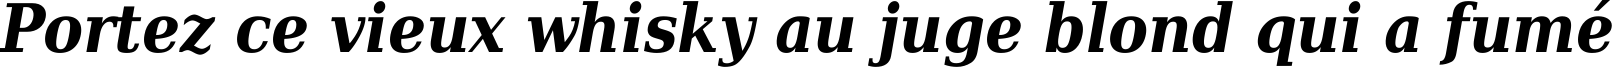 Пример написания шрифтом DejaVu Serif Condensed Bold Italic текста на французском